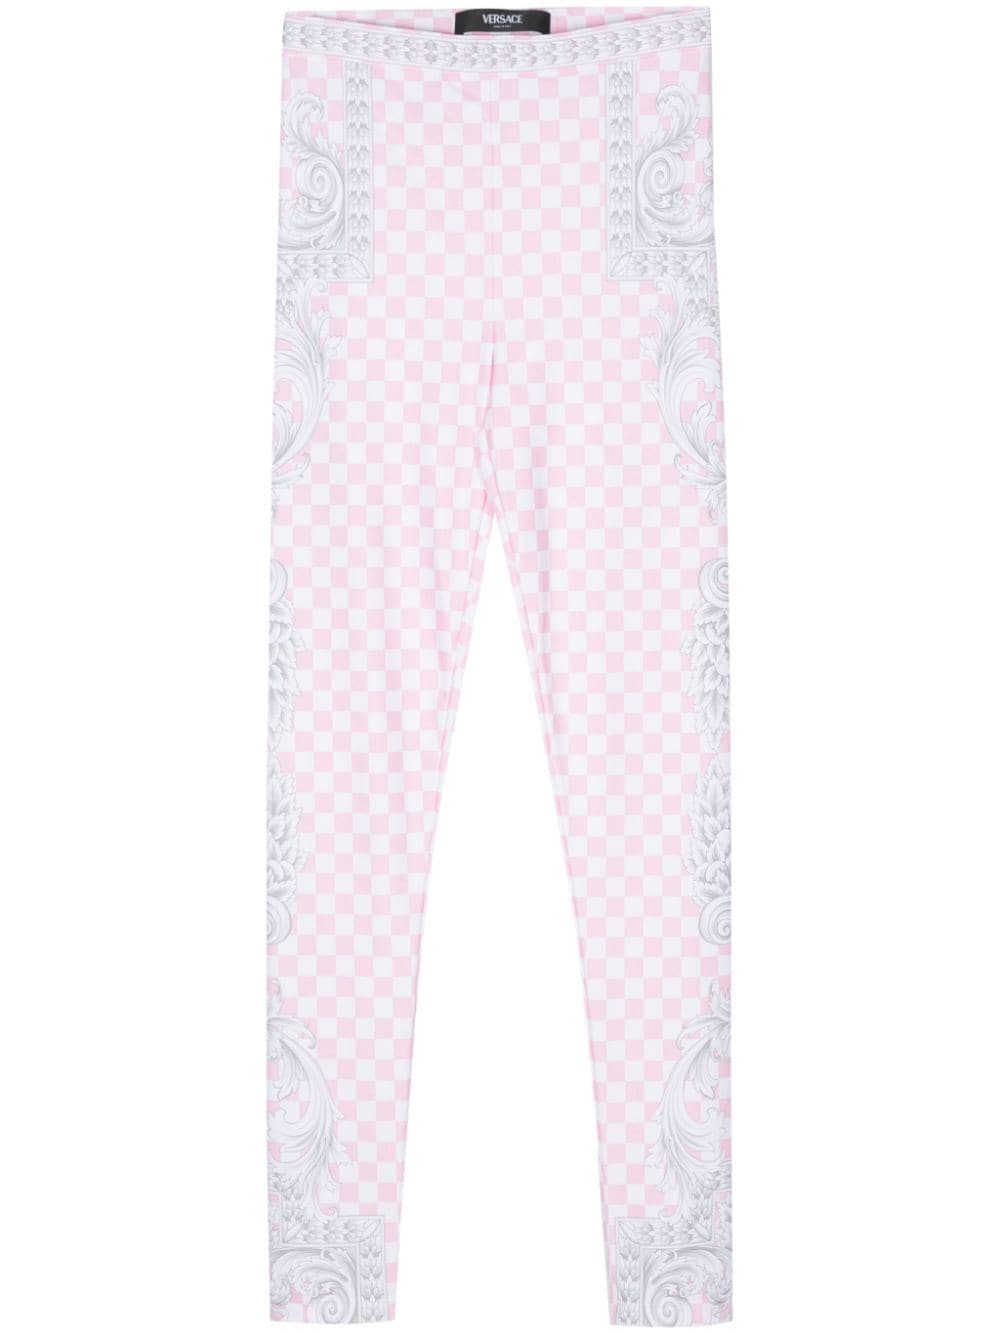 checkerboard-pattern leggings